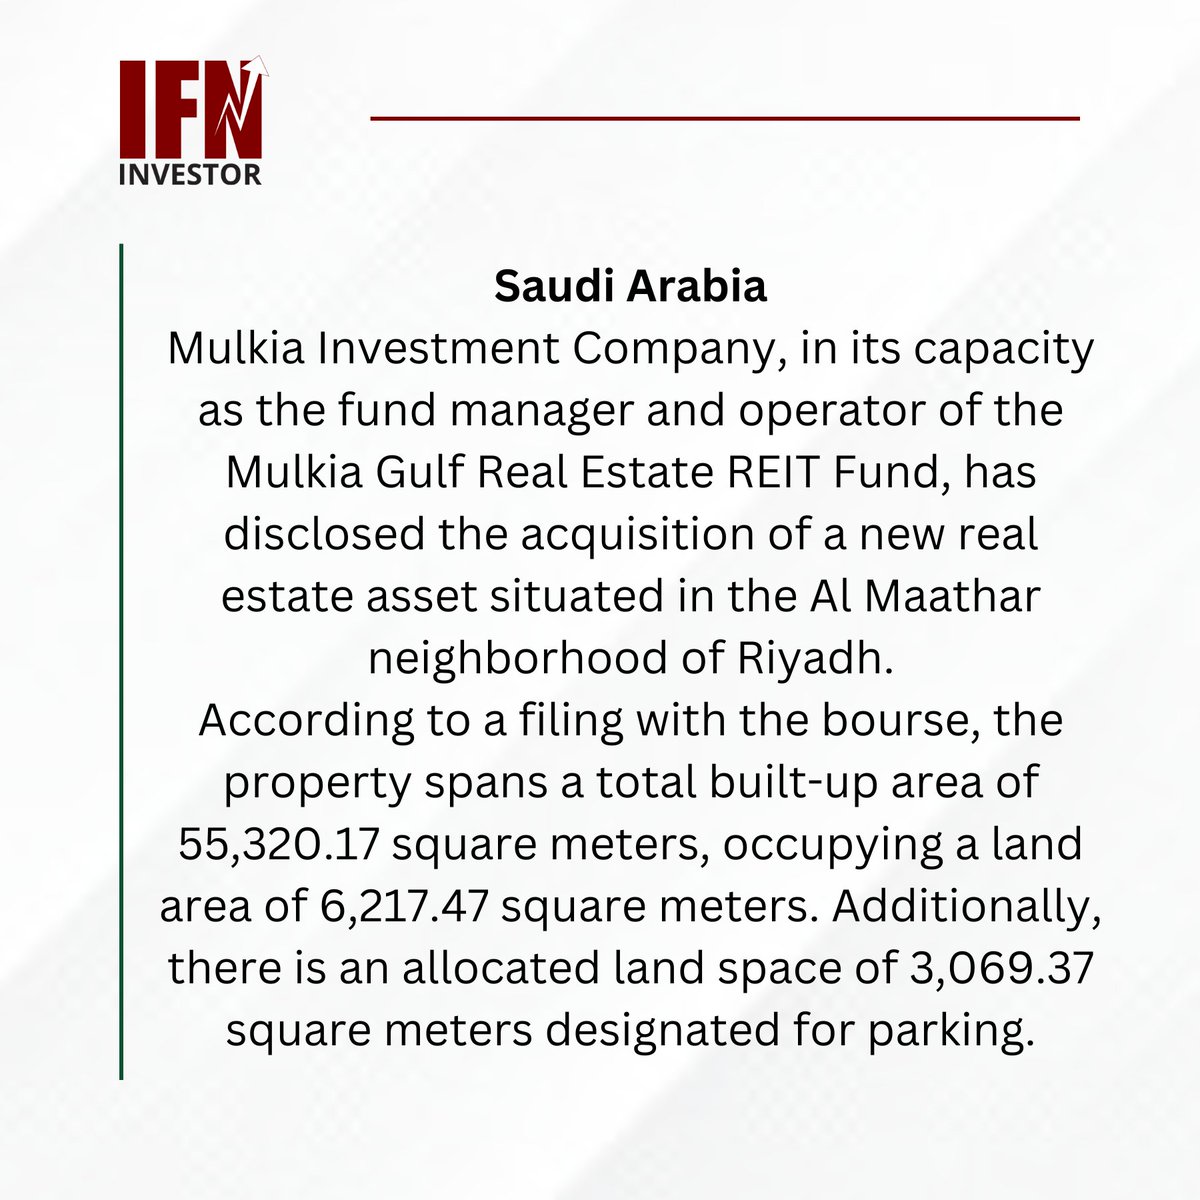 Latest News: Acquisition Announcement: Mulkia Gulf Real Estate REIT Fund Expands Portfolio in Riyadh.

#IFNInvestor #REDmoney #IFN #IslamicFinance #InvestmentBanking #RealEstateInvestment #RiyadhProperty #REITFund #MulkiaInvestment #AlMaathar